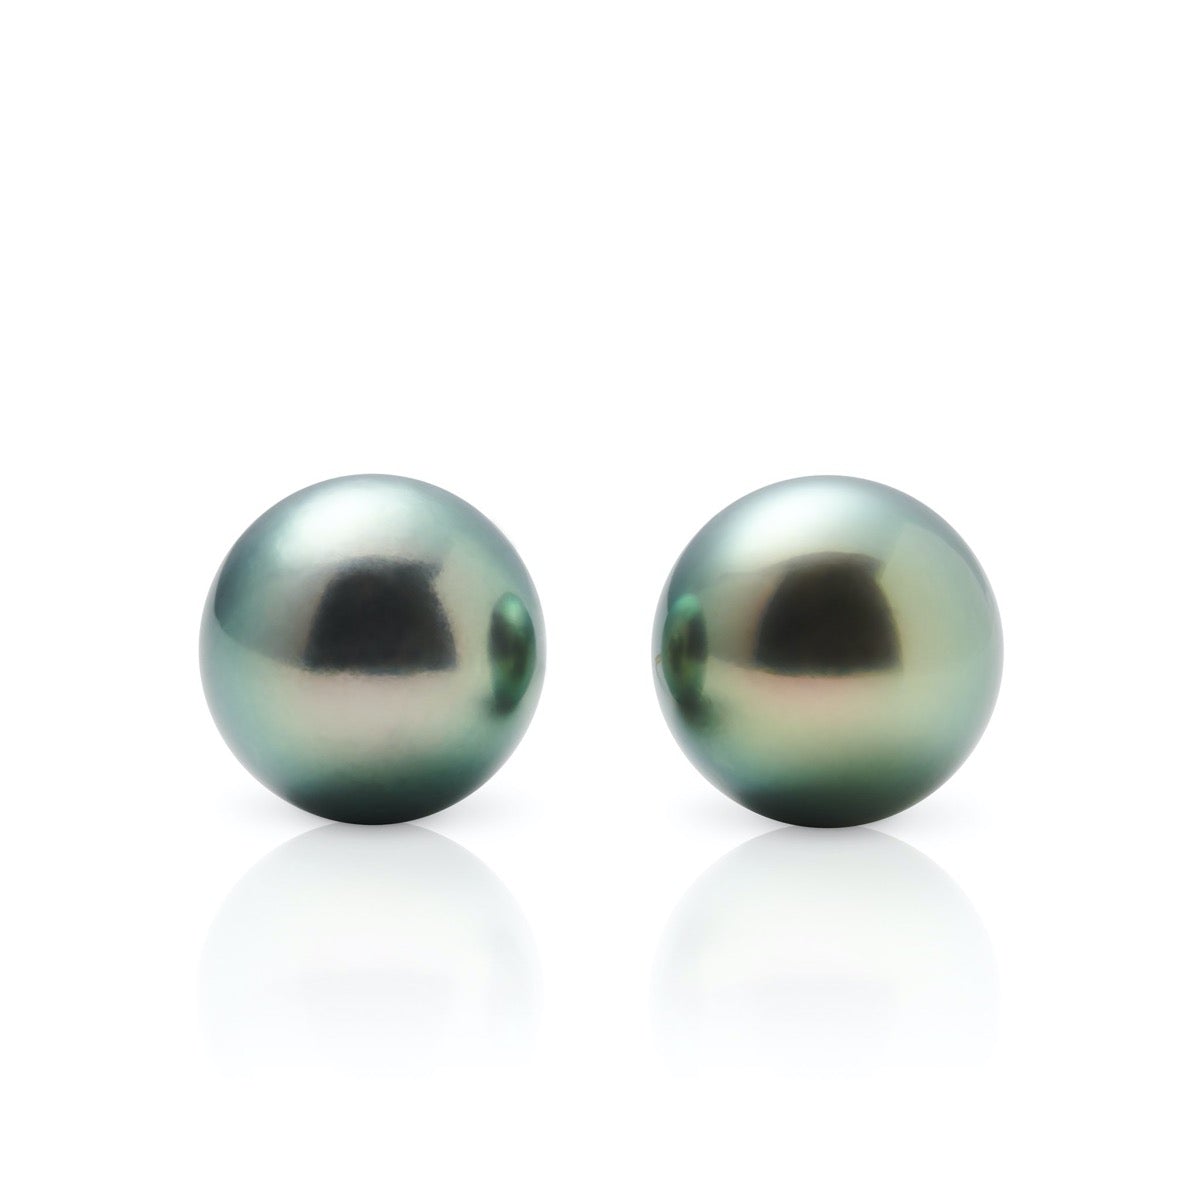 12mm Gray Tahitian Pearl Earrings